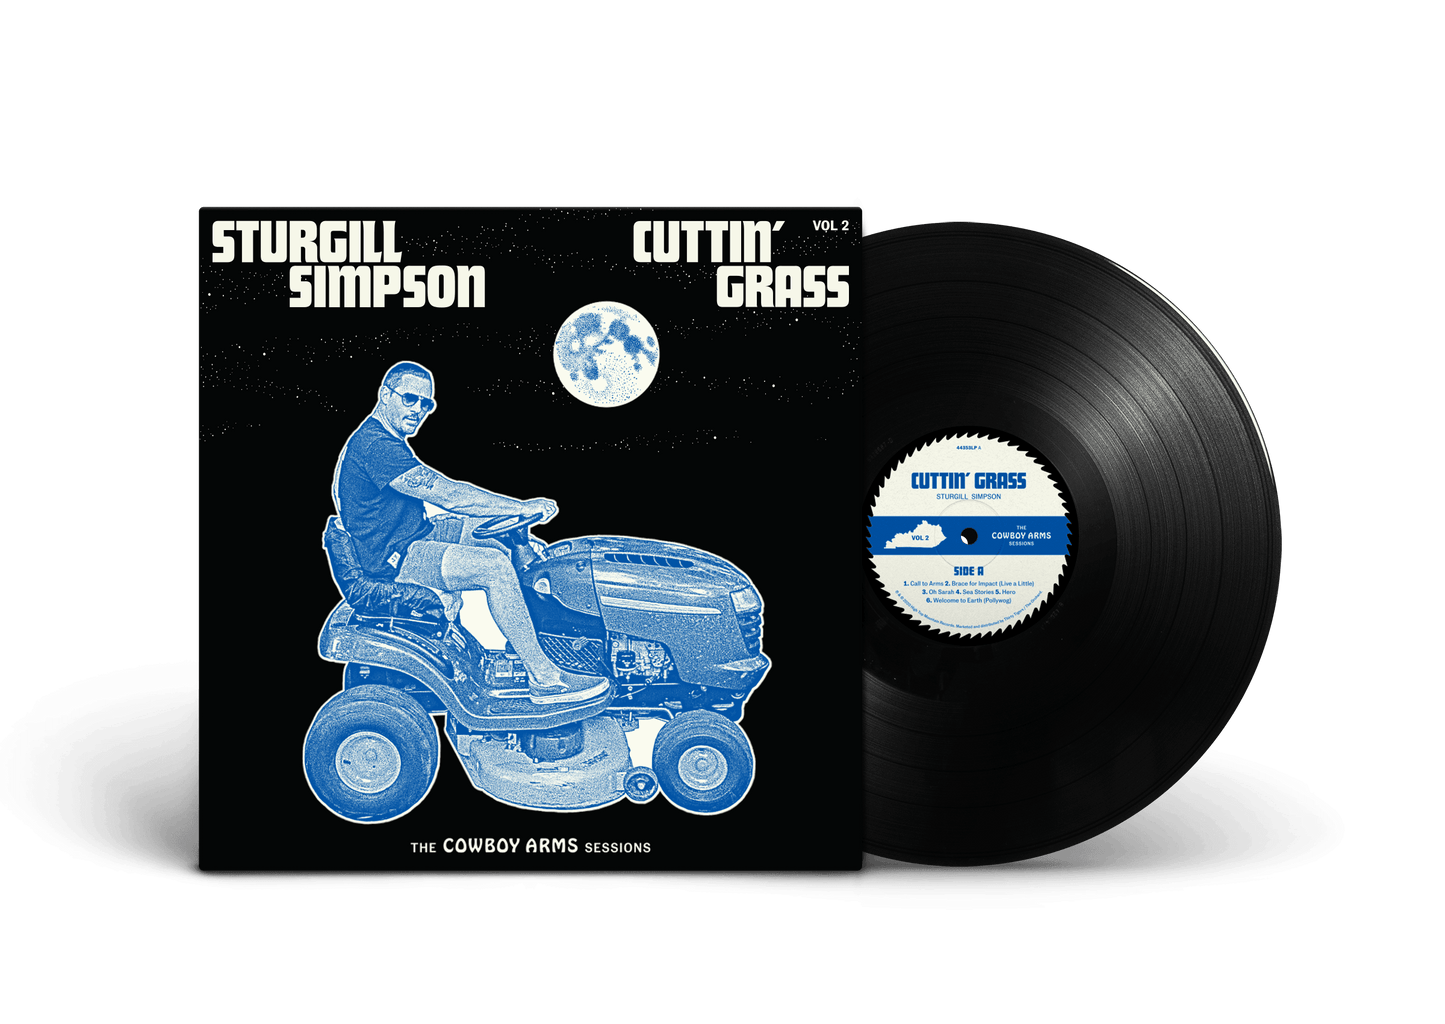 Sturgill Simpson - Cuttin' Grass Vol. 2 (Cowboy Arms Sessions) (Vinyl) - Joco Records